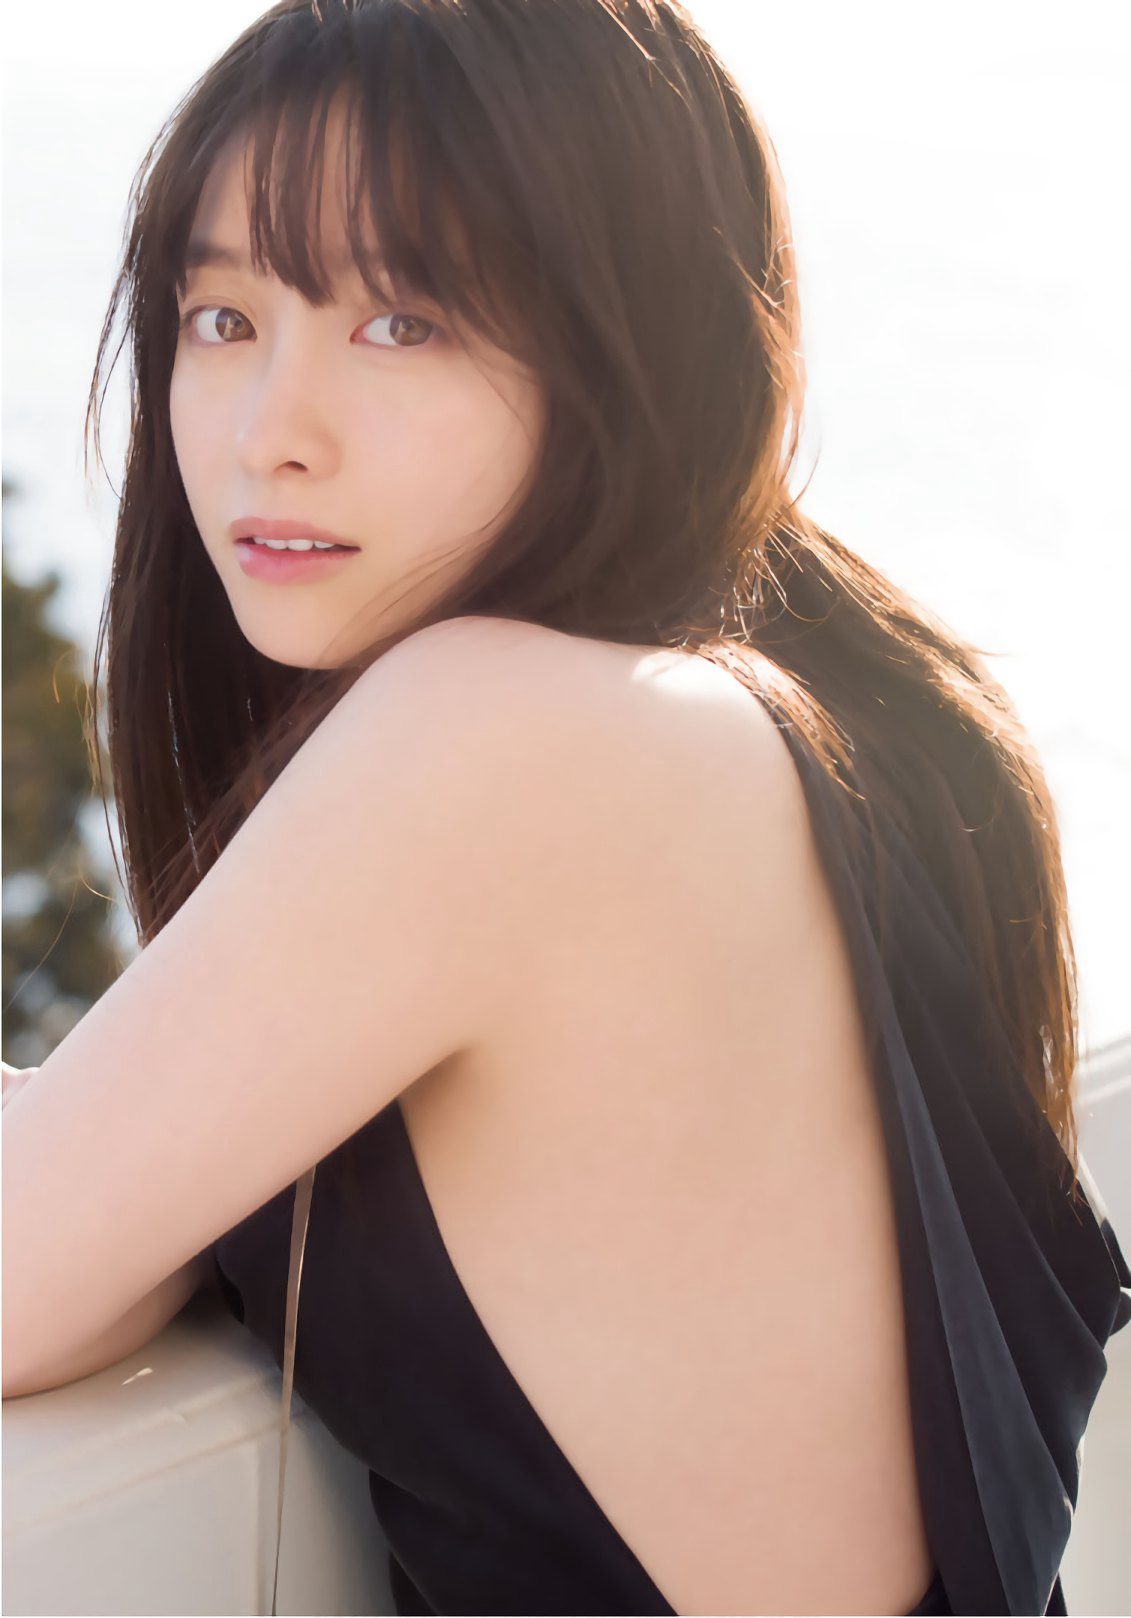 Kanna Hashimoto Long Hair Asian 1131x1618